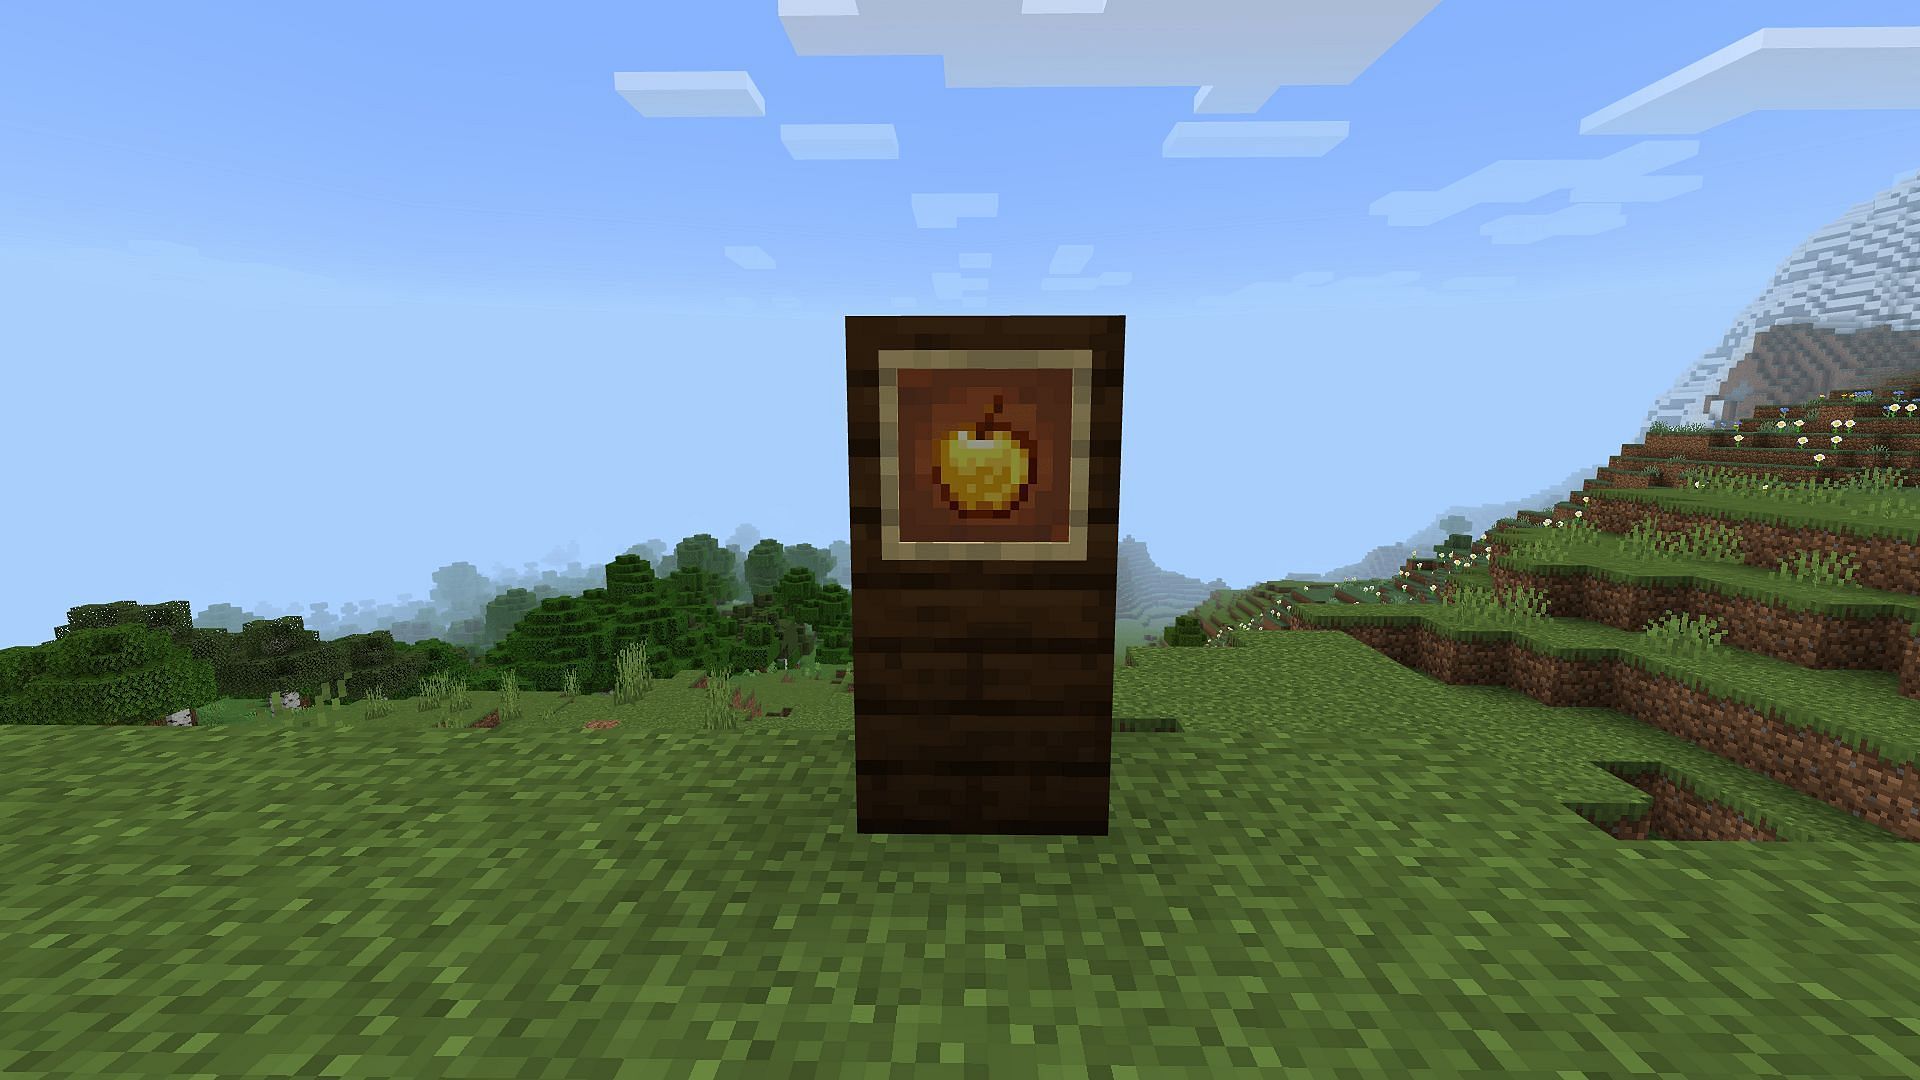 A golden apple in an item frame (Image via Mojang)